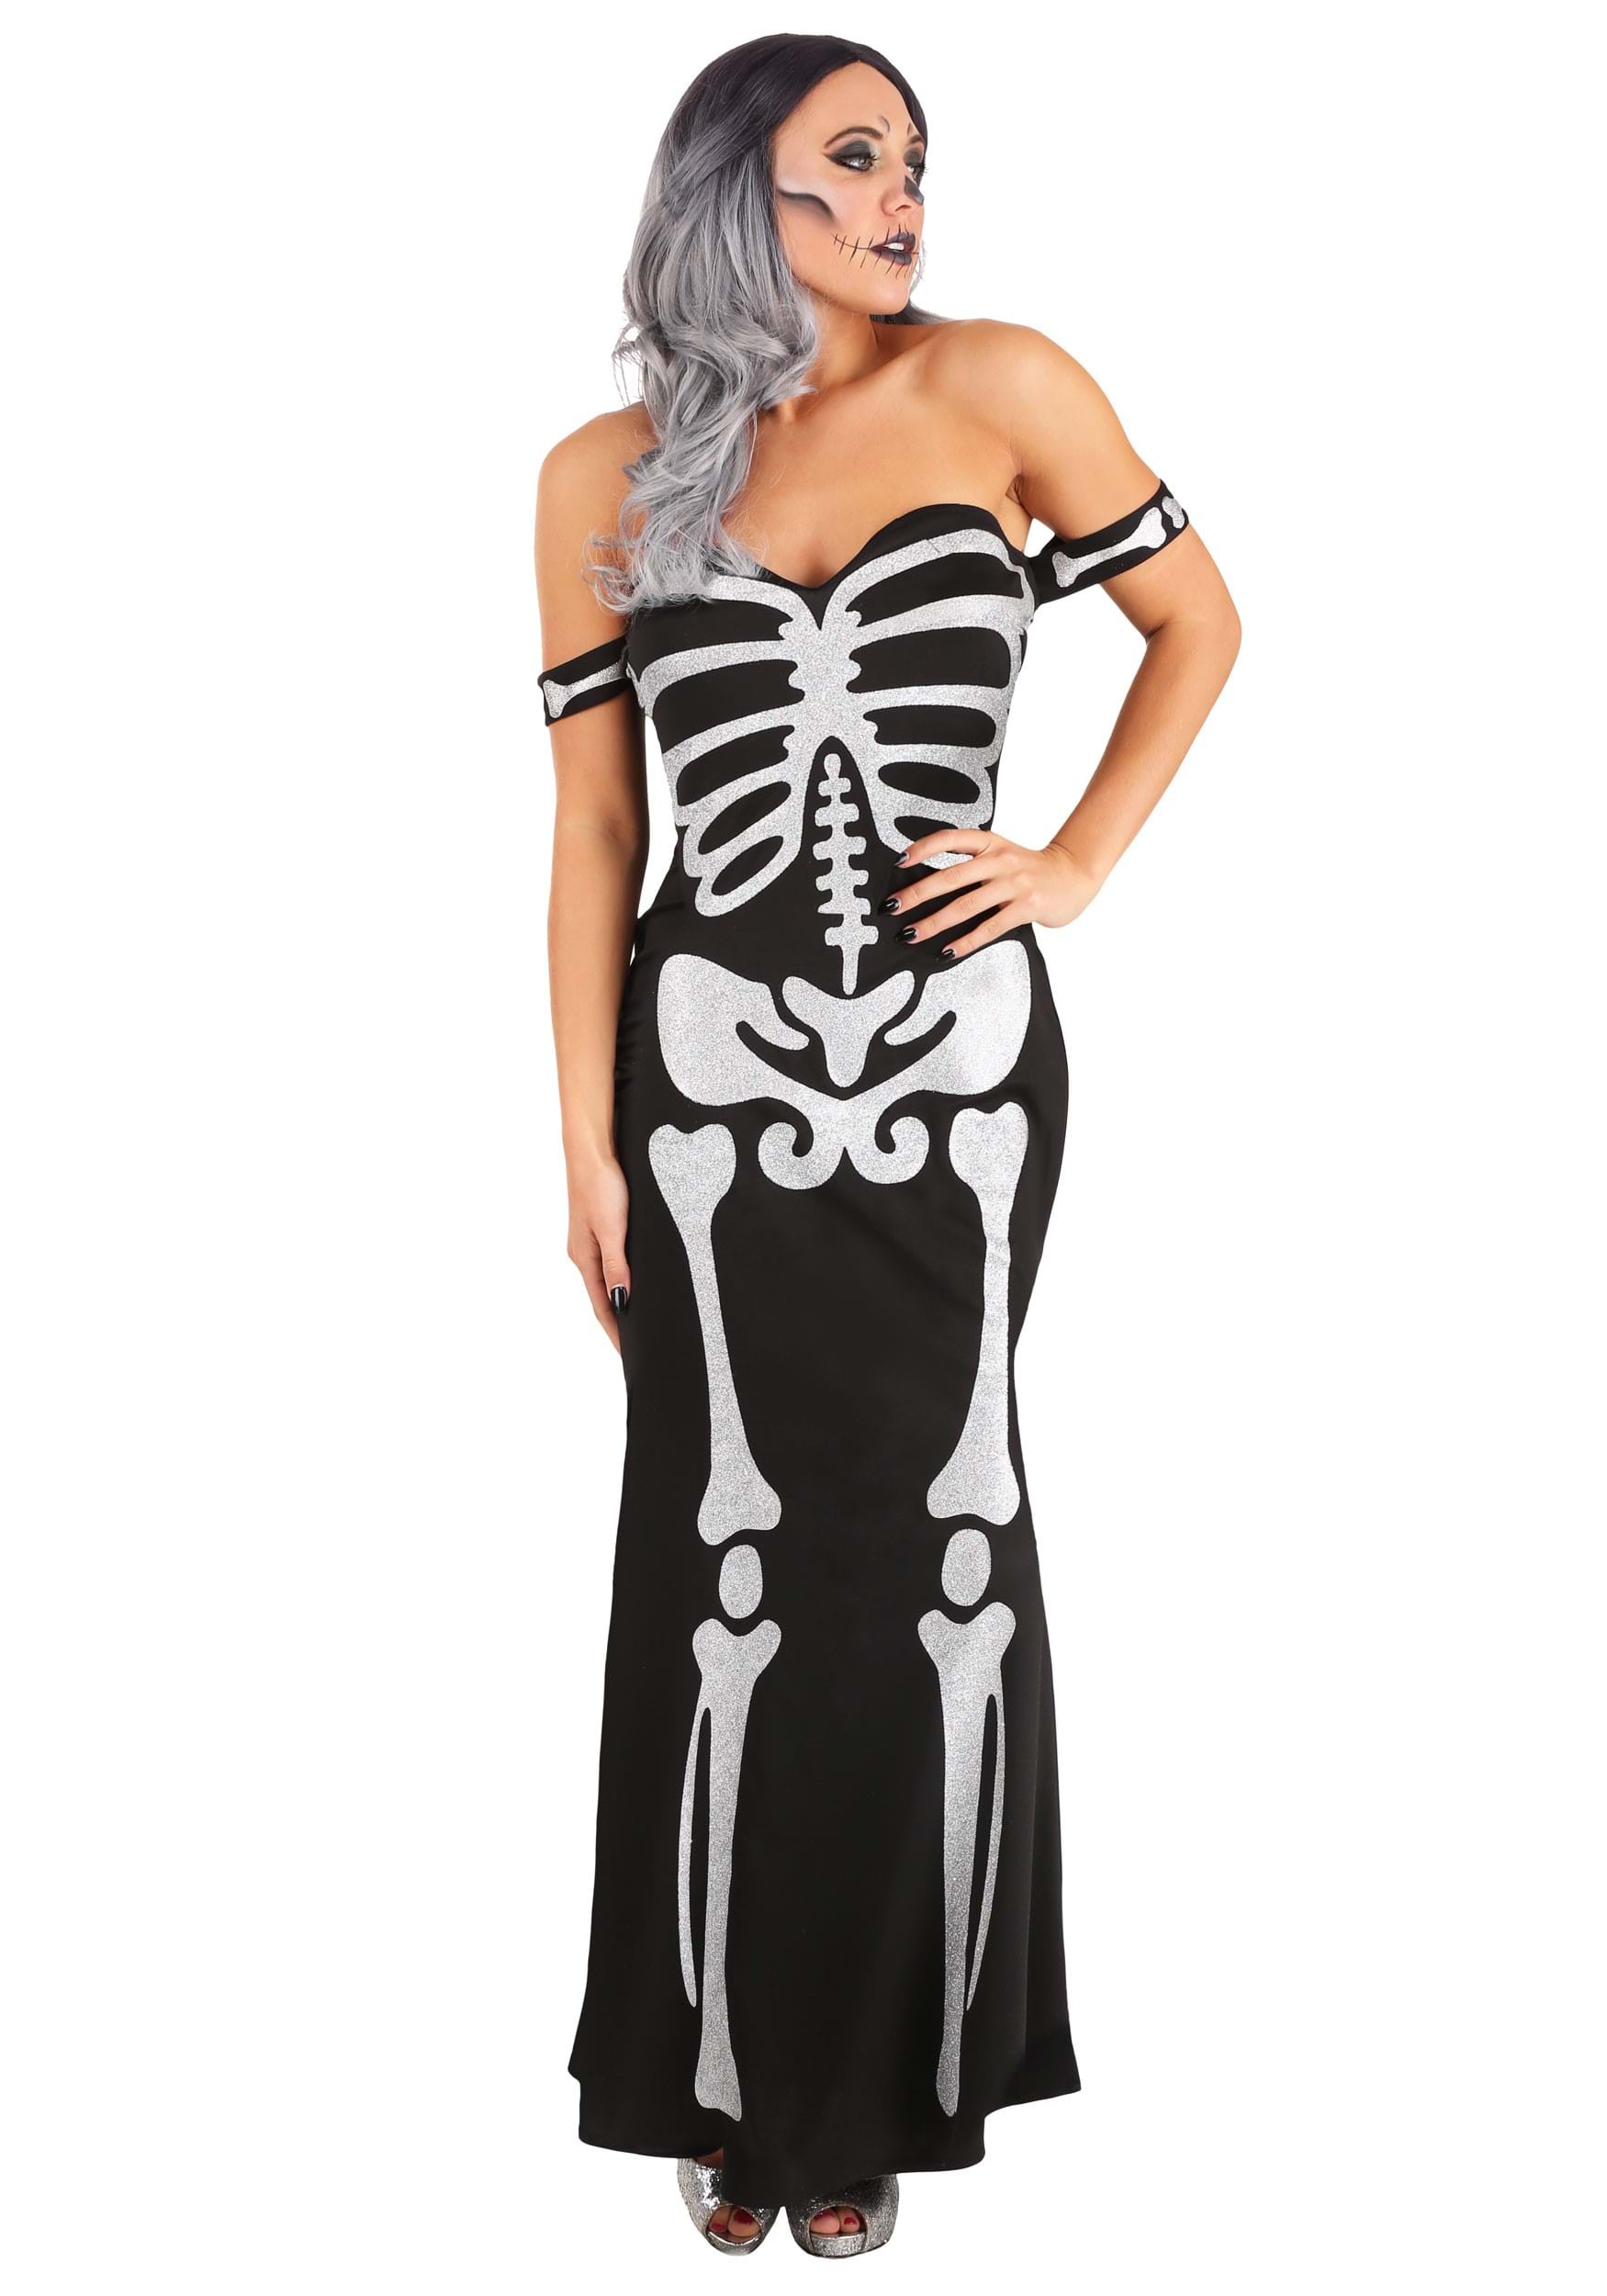 High Fashion Women Skeleton Costume